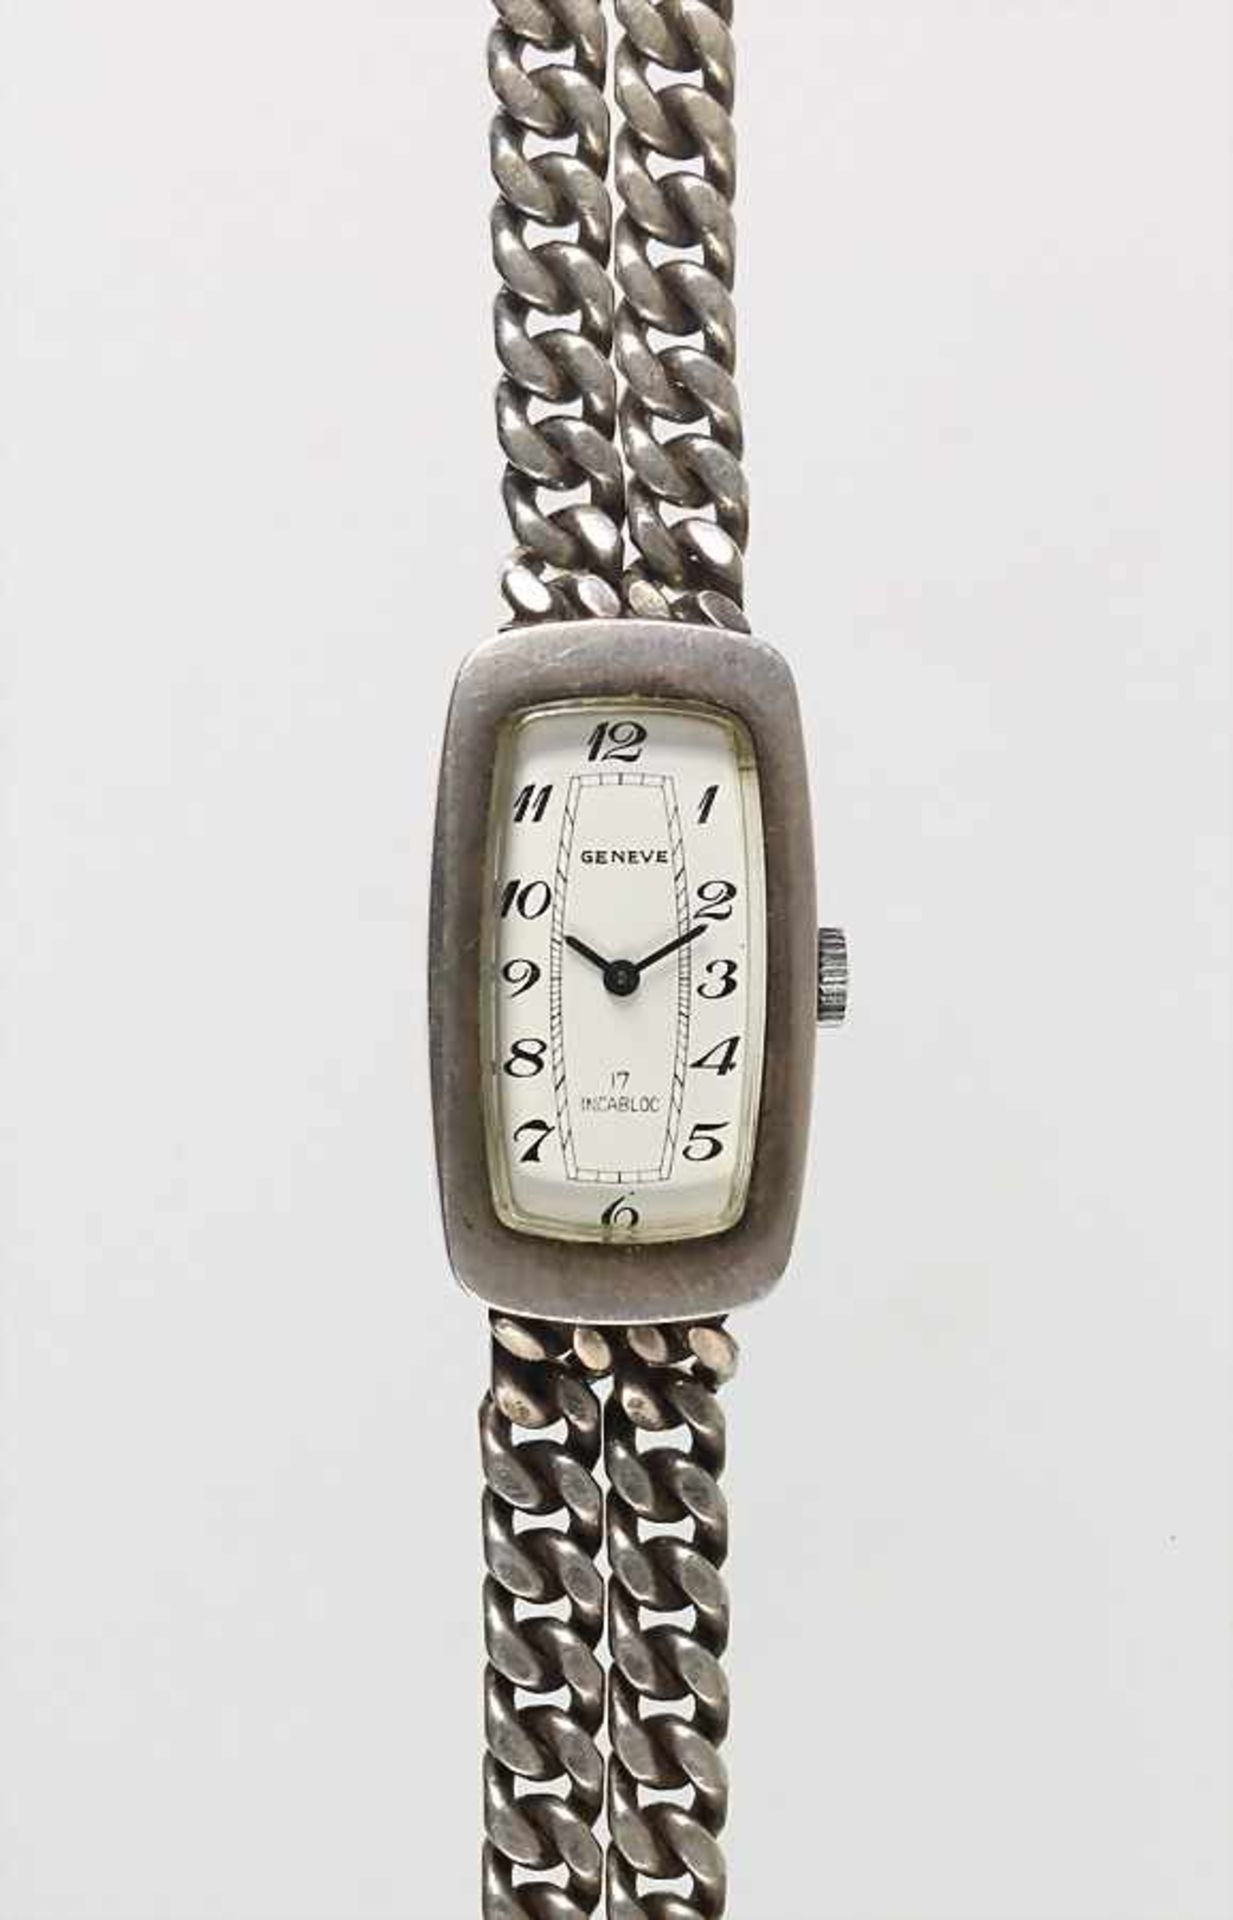 Damen-Armbanduhr, "VINTAGE" 1940/50er Jahre, Handaufzug, Silber 925/000, sig.: GENEVE, arab. Zahlen,